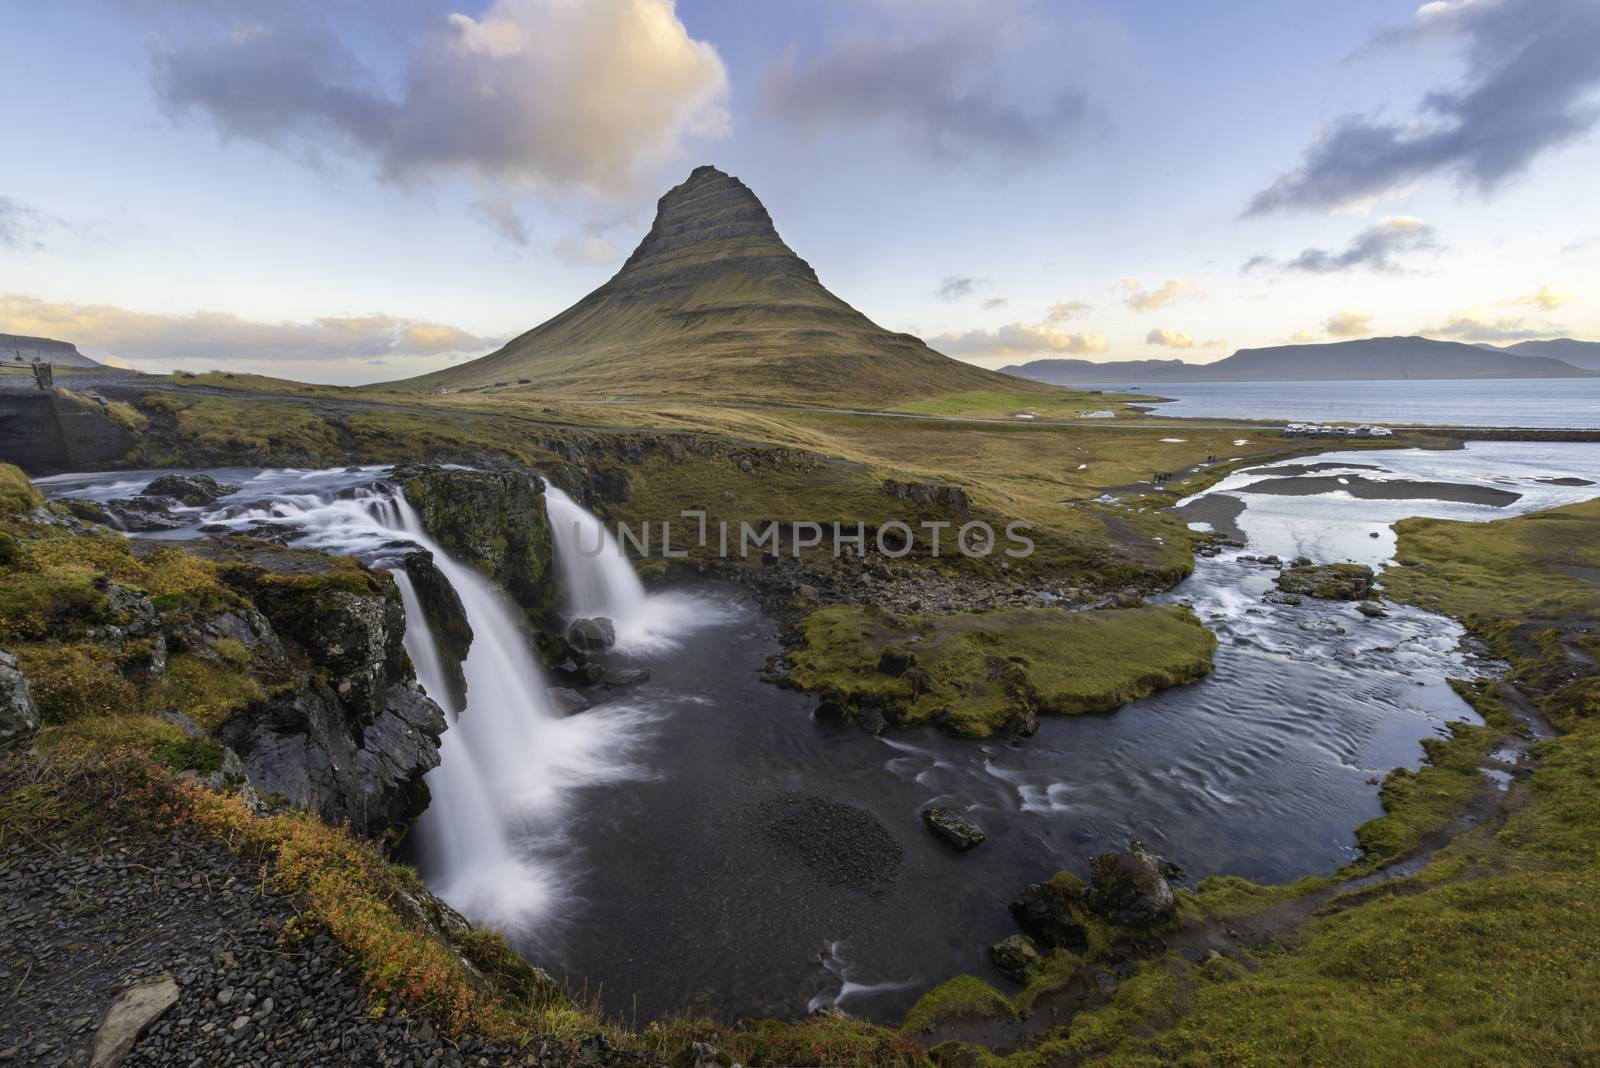 Kirkjufellsfoss Waterfall is located in West Iceland, close to Kirkjufell Mountain and Grundarfjörður Town (Grundarfjordur) on the Snæfellsnes Peninsula